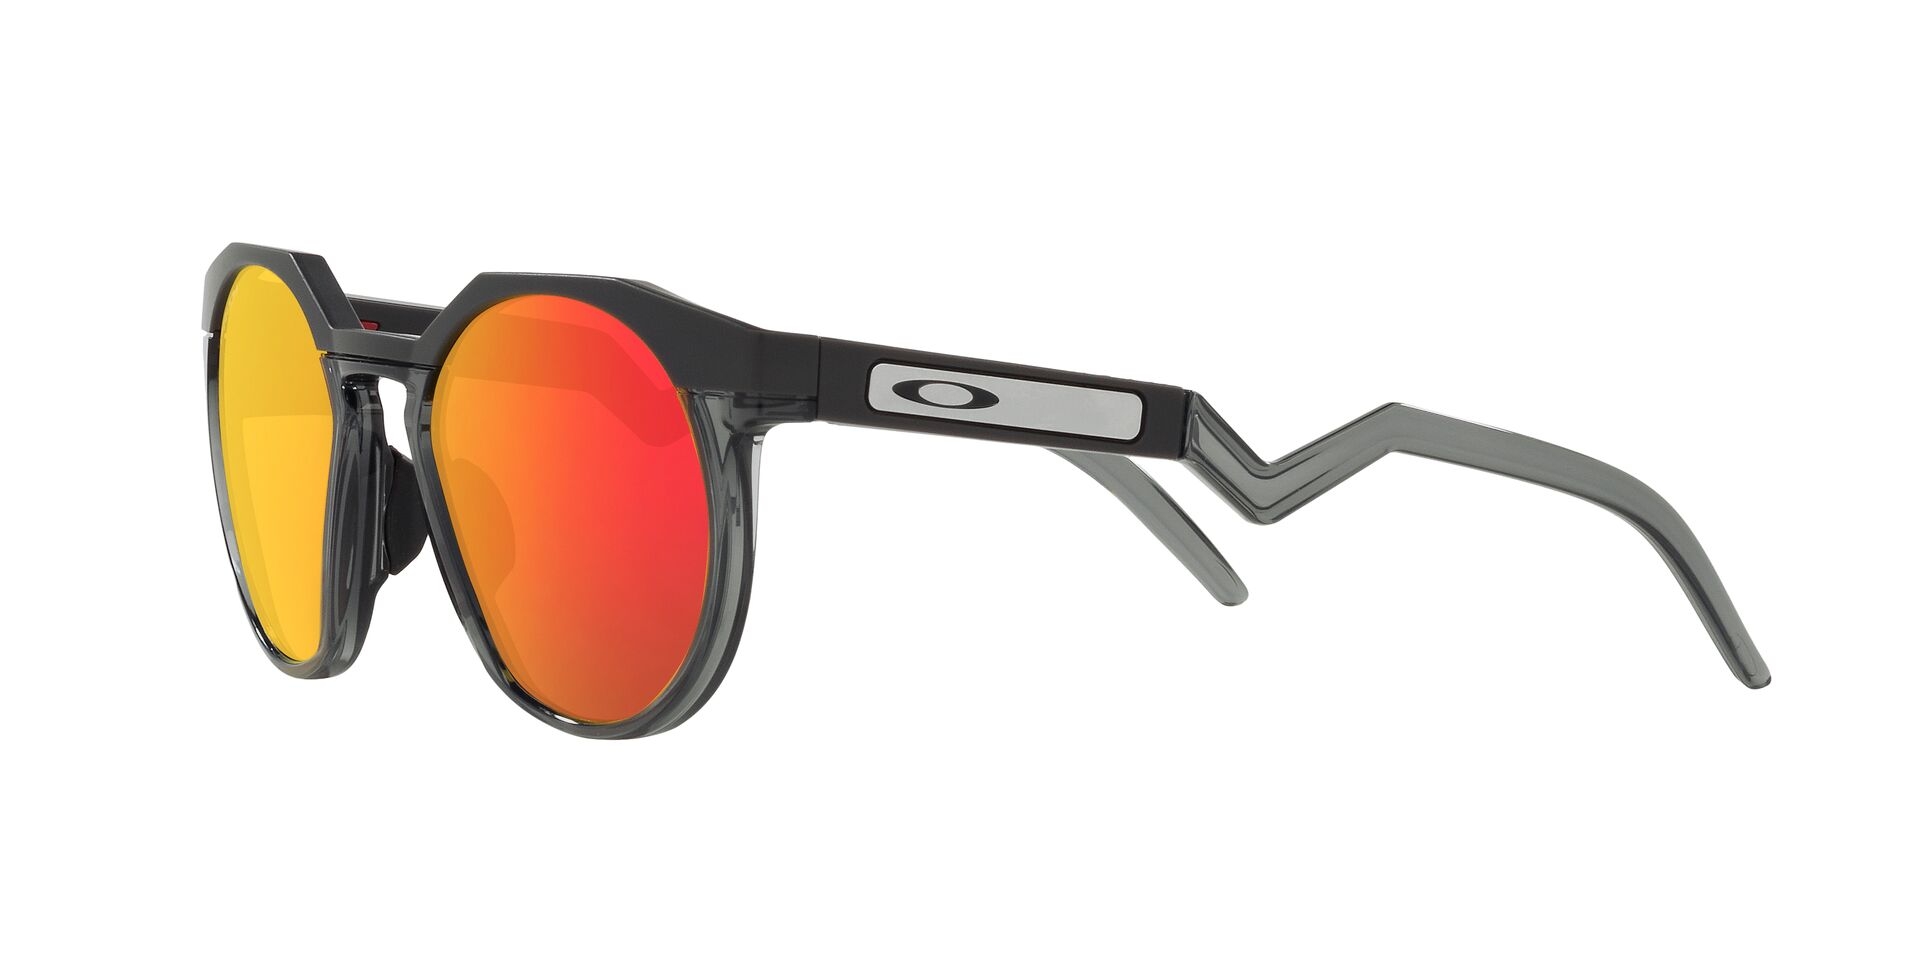 Details 148+ latest mens oakley sunglasses super hot